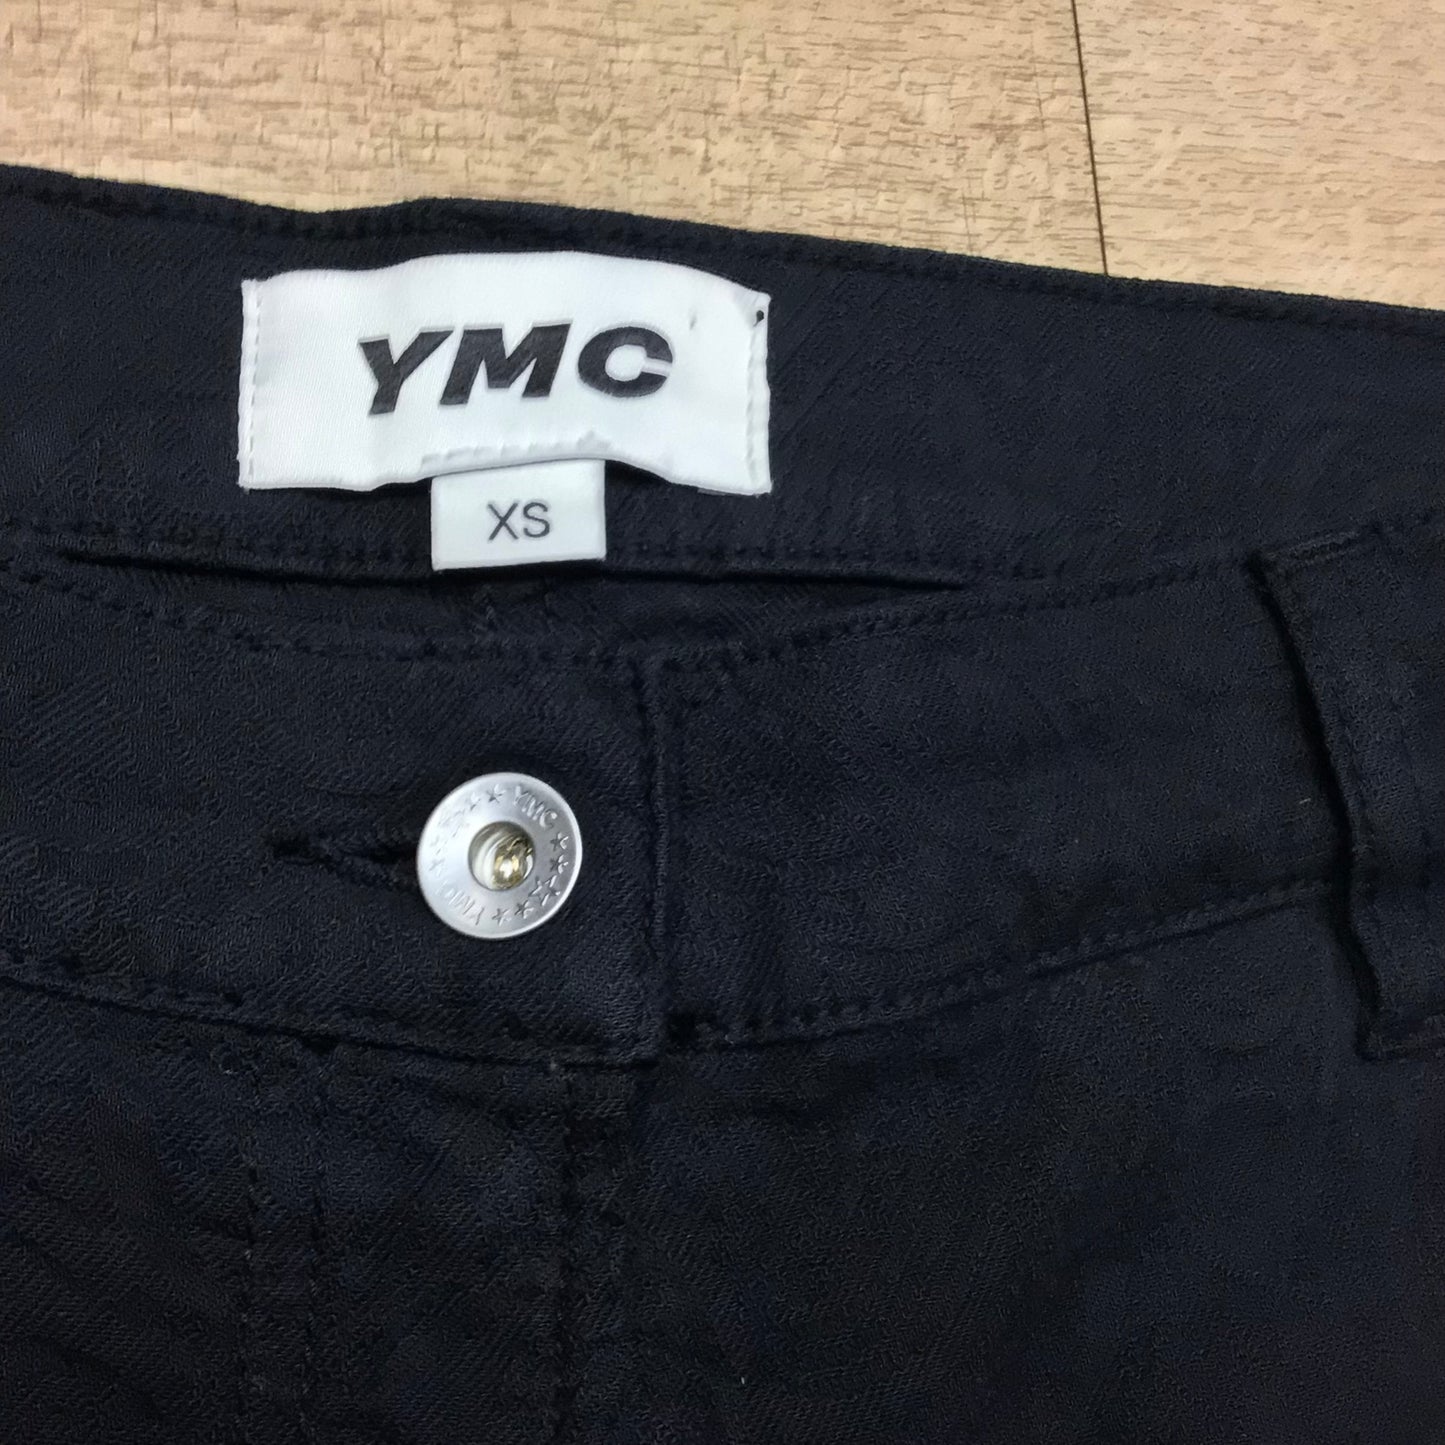 YMC Black Paisley Patterned Jeans Trousers Size XS